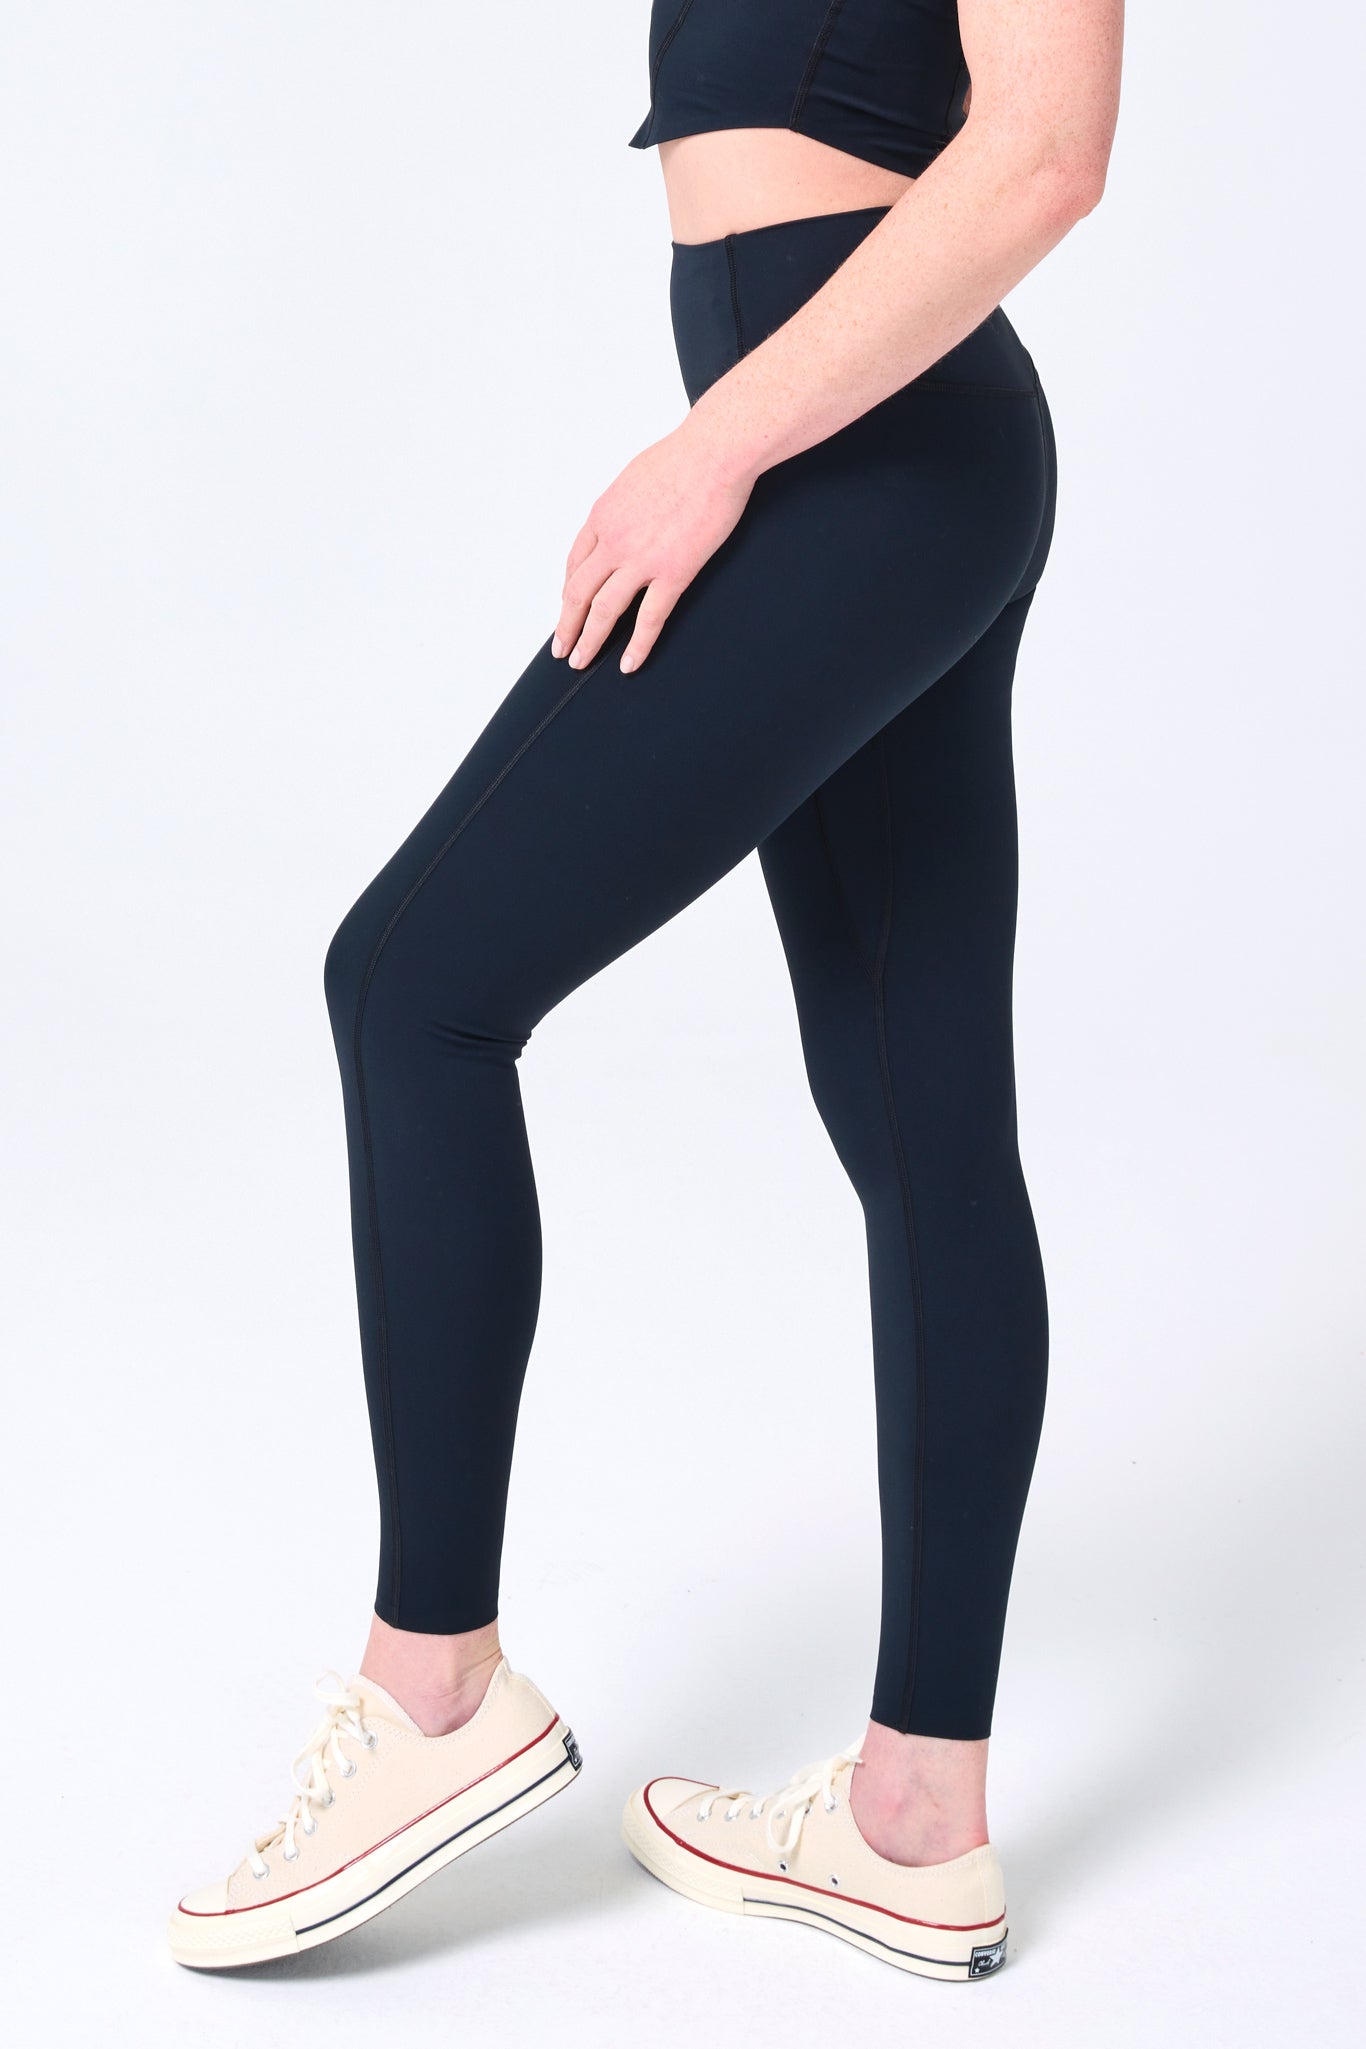 High Waisted Leggings - Regular Length w/Pockets - OneSize - Black & Biker  Shorts - 8 inch - Pockets - Small